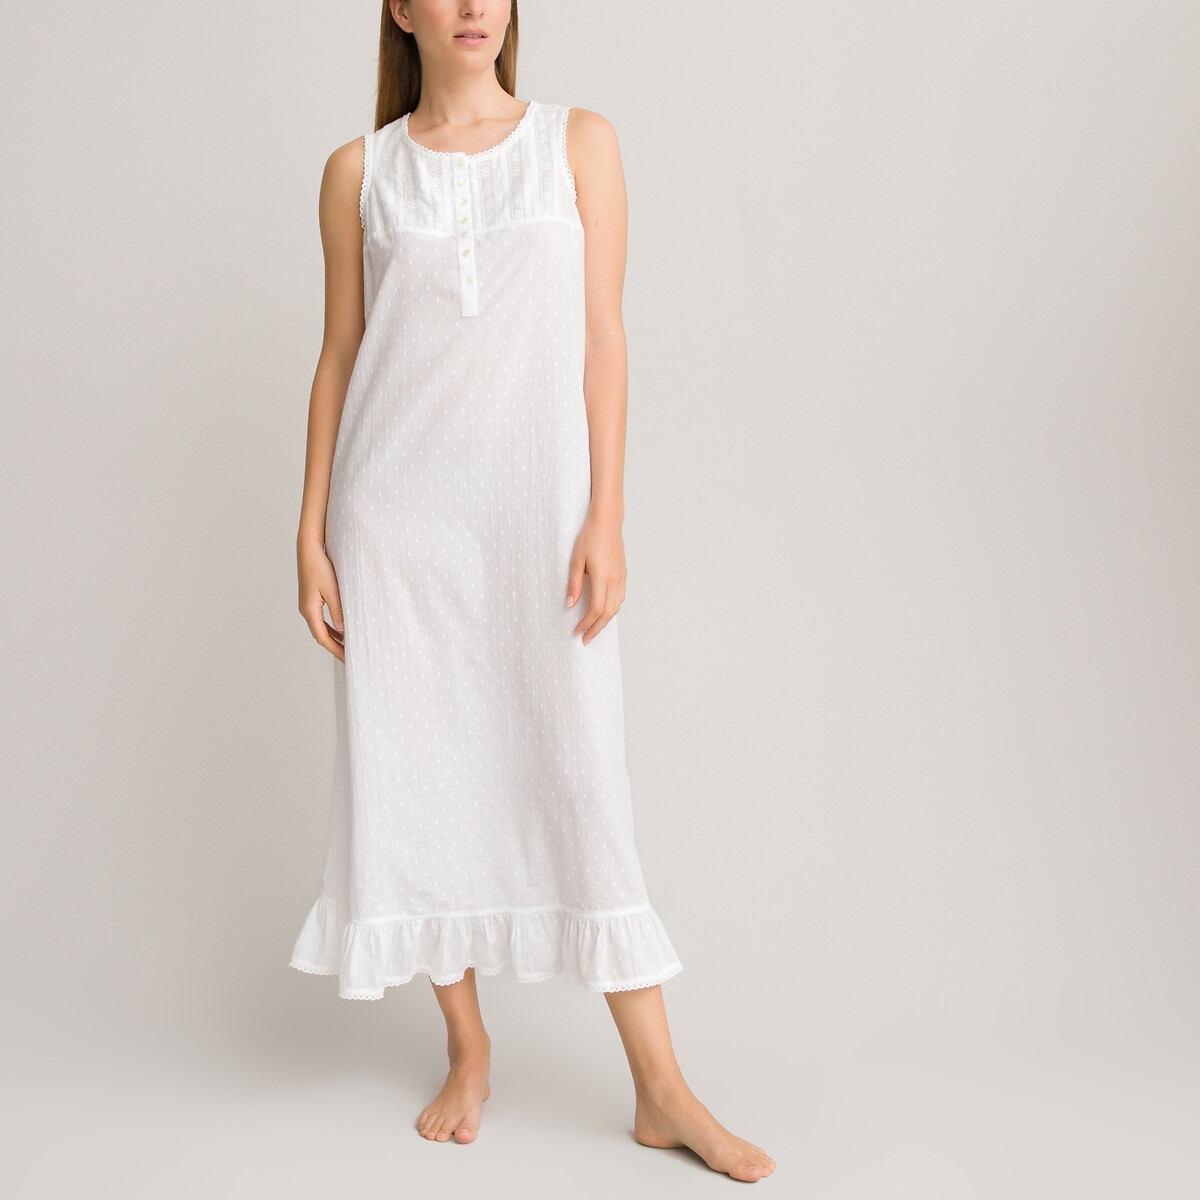 Embroidered Cotton Sleeveless Nightdress with Ruffled Hem